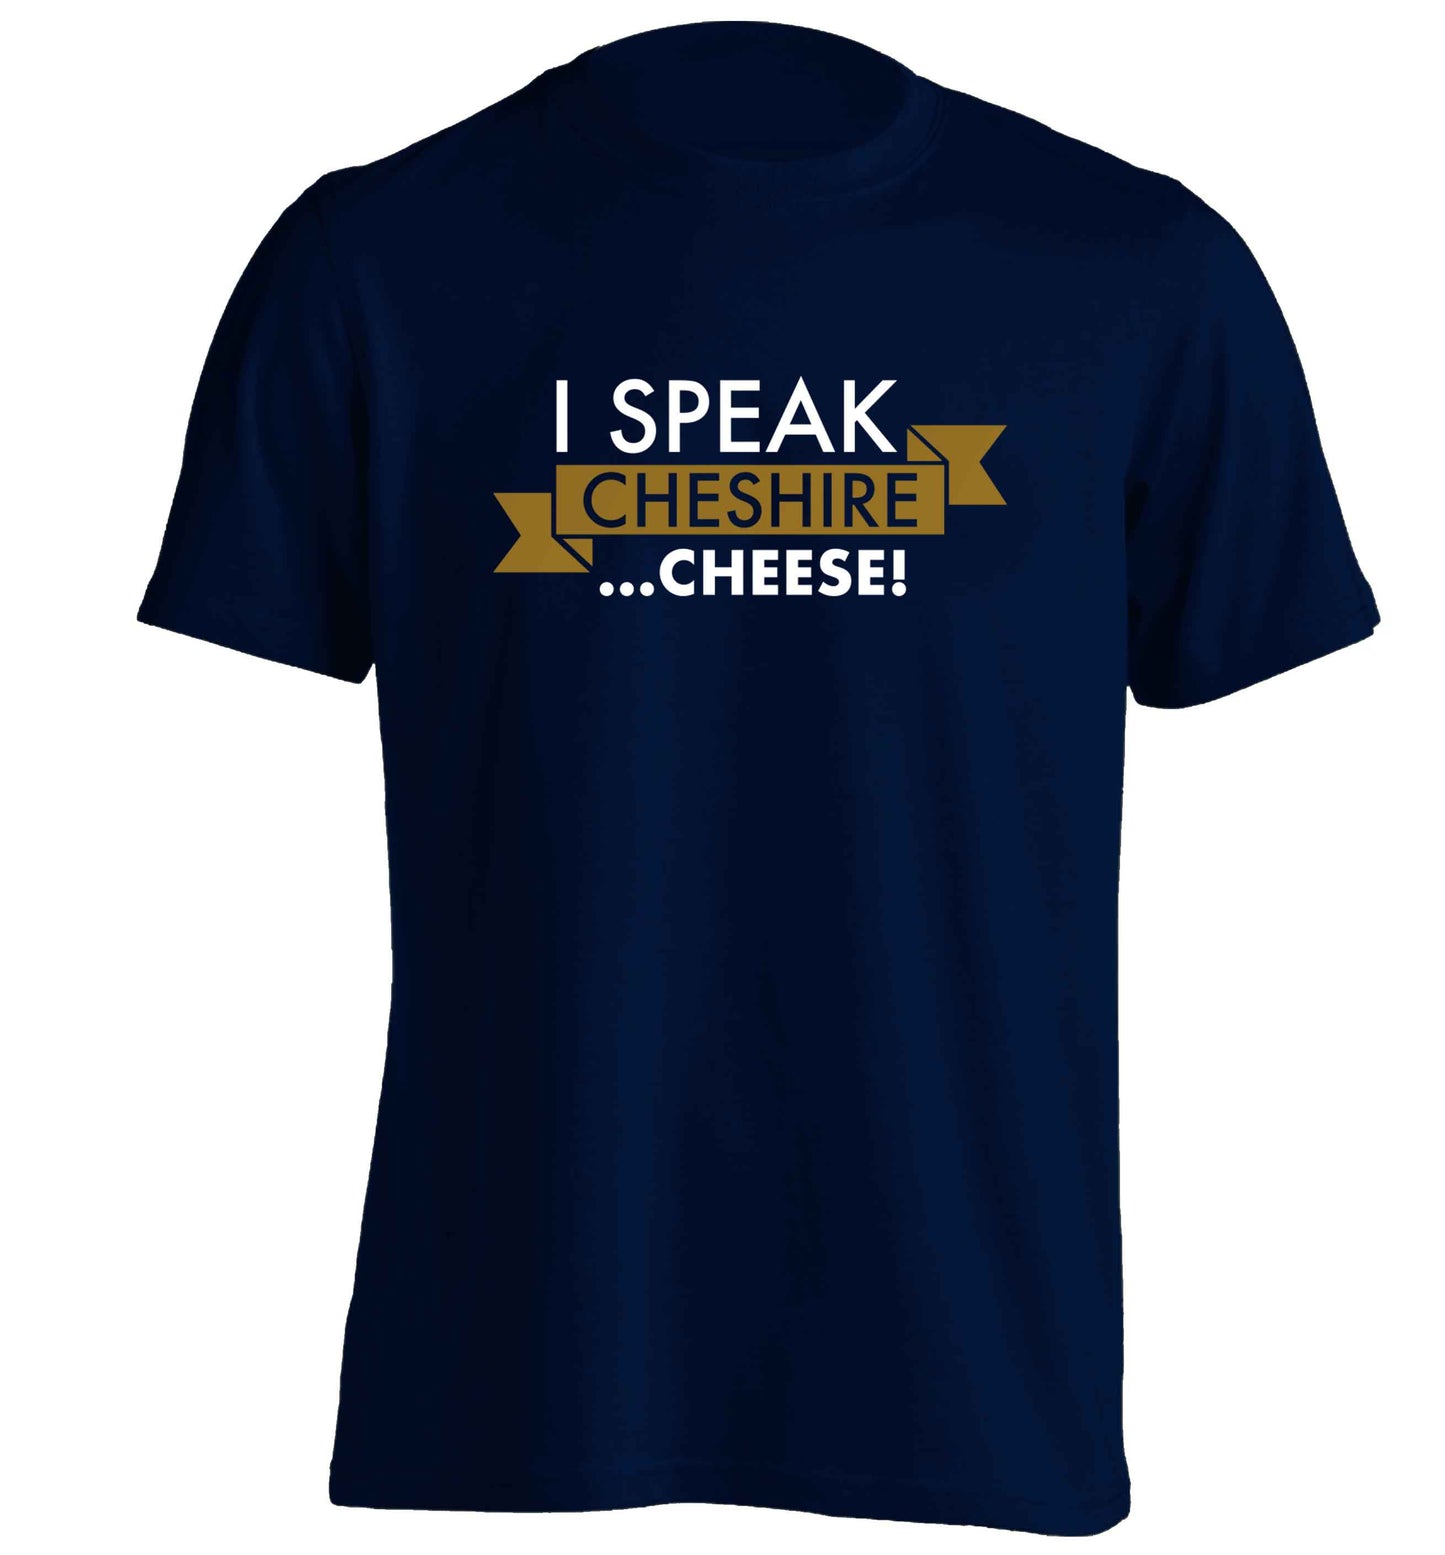 I speak Cheshire cheese adults unisex navy Tshirt 2XL